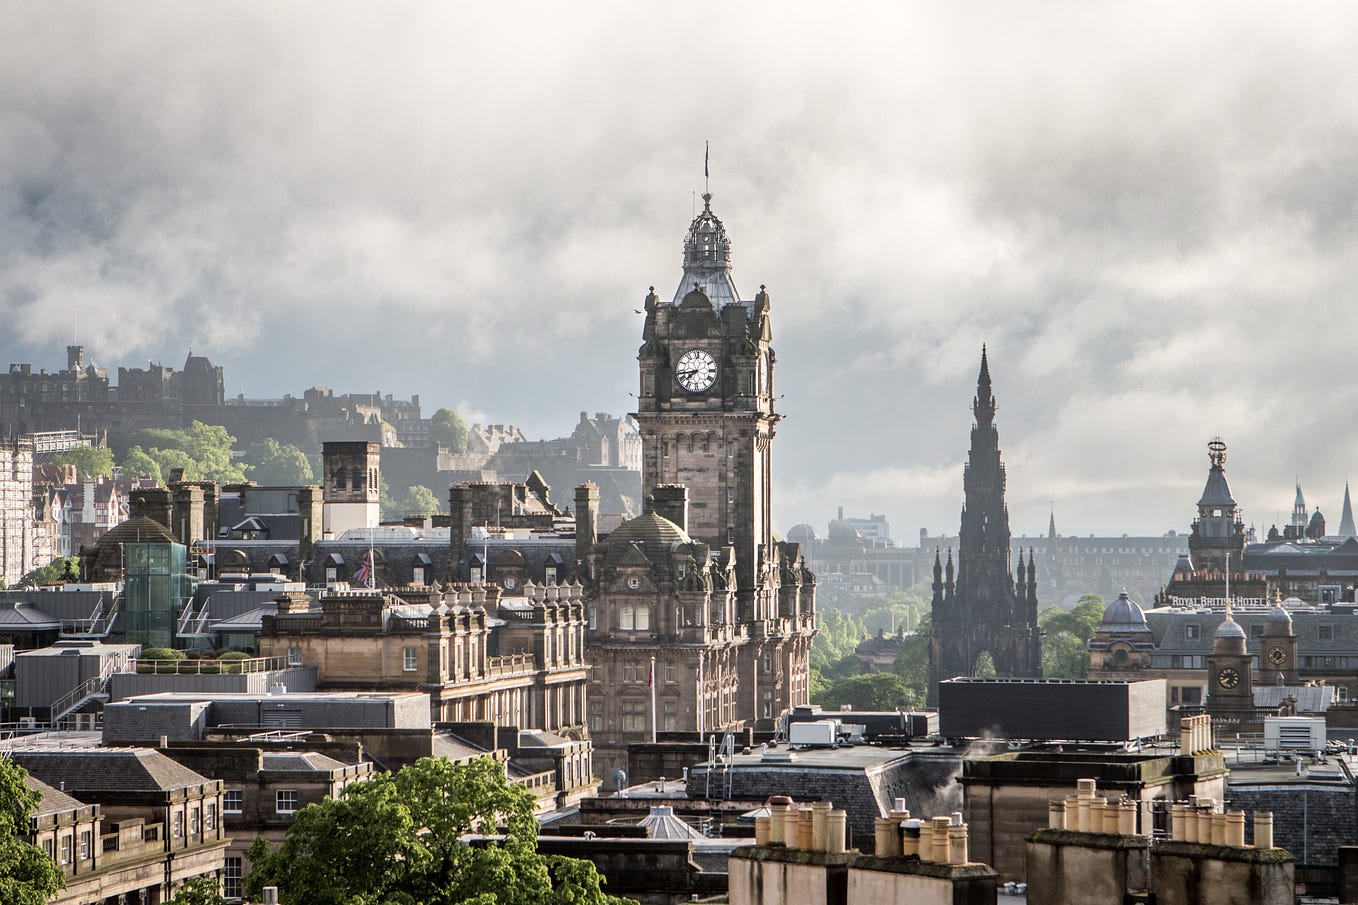 Edinburgh clock tower